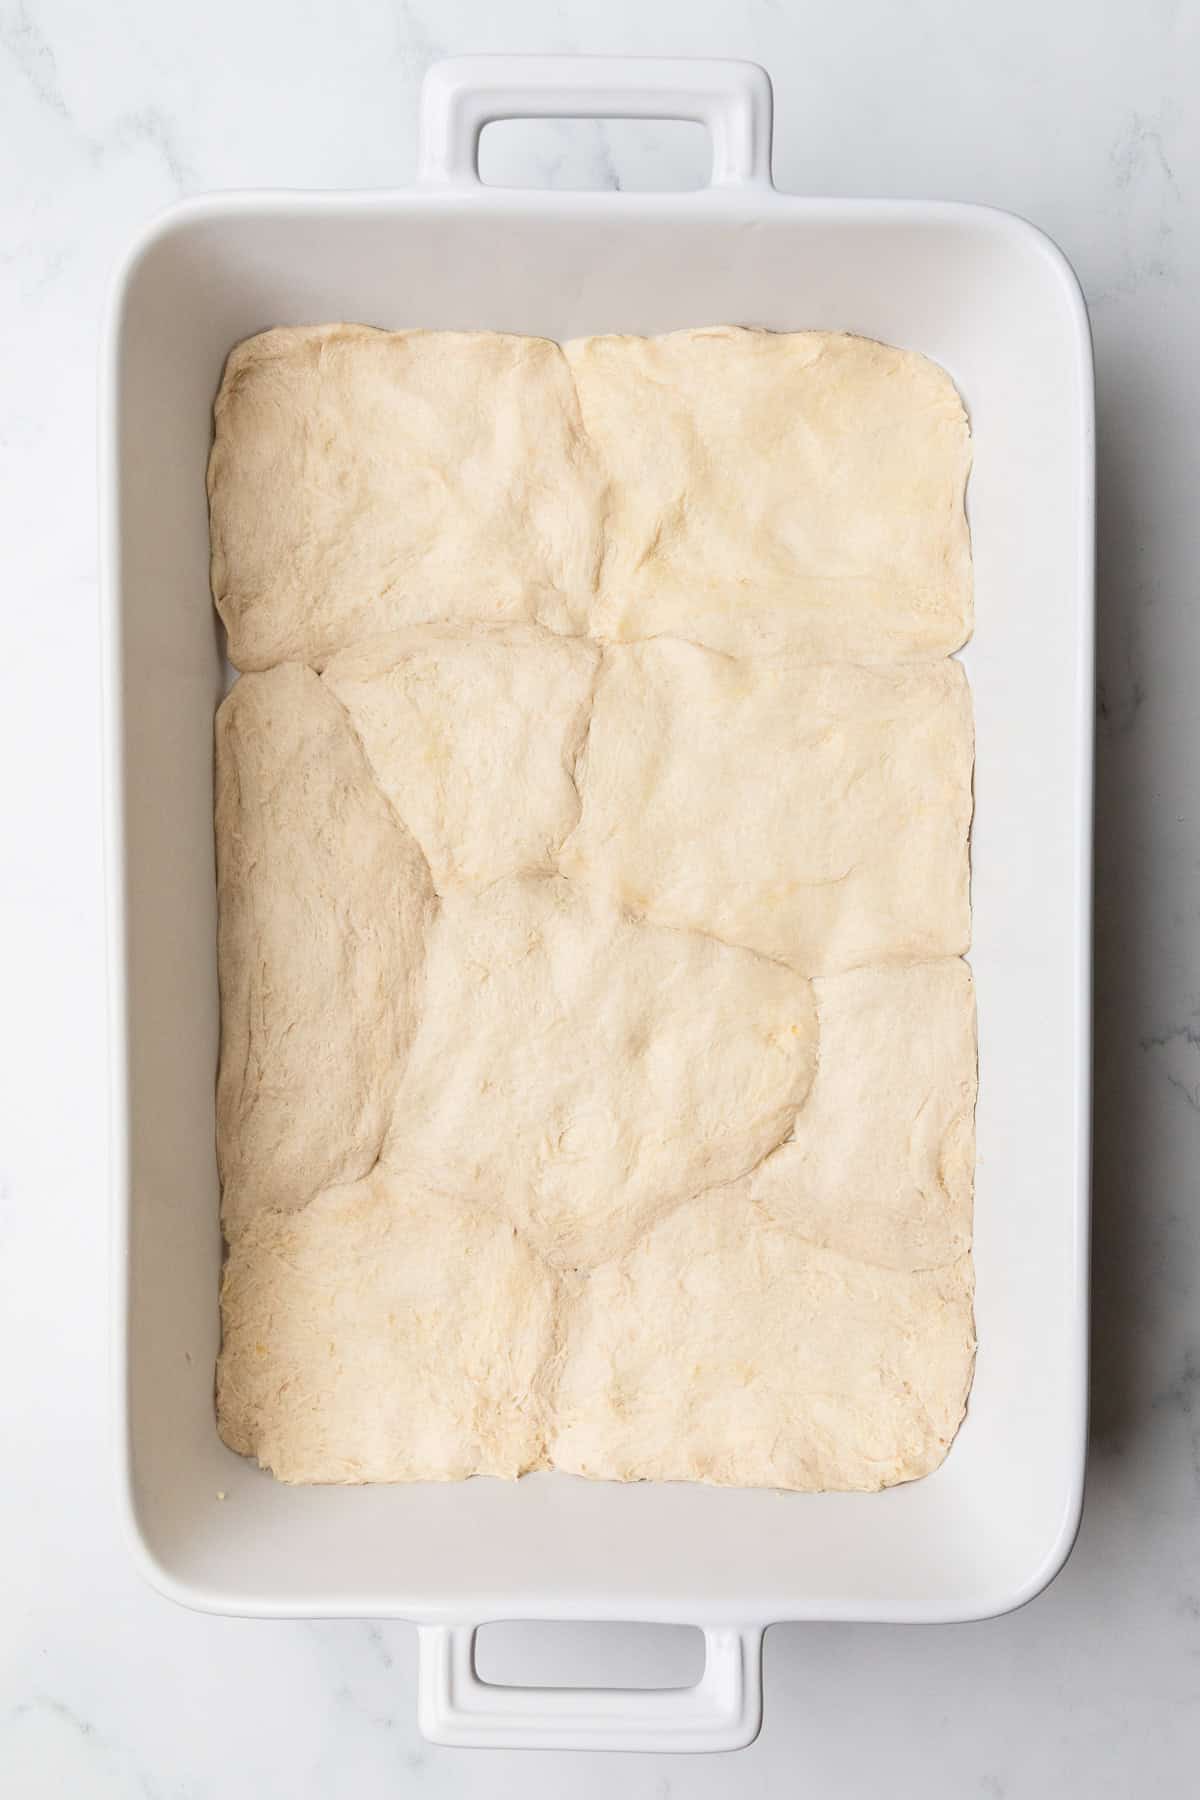 Biscuit crust in pan.